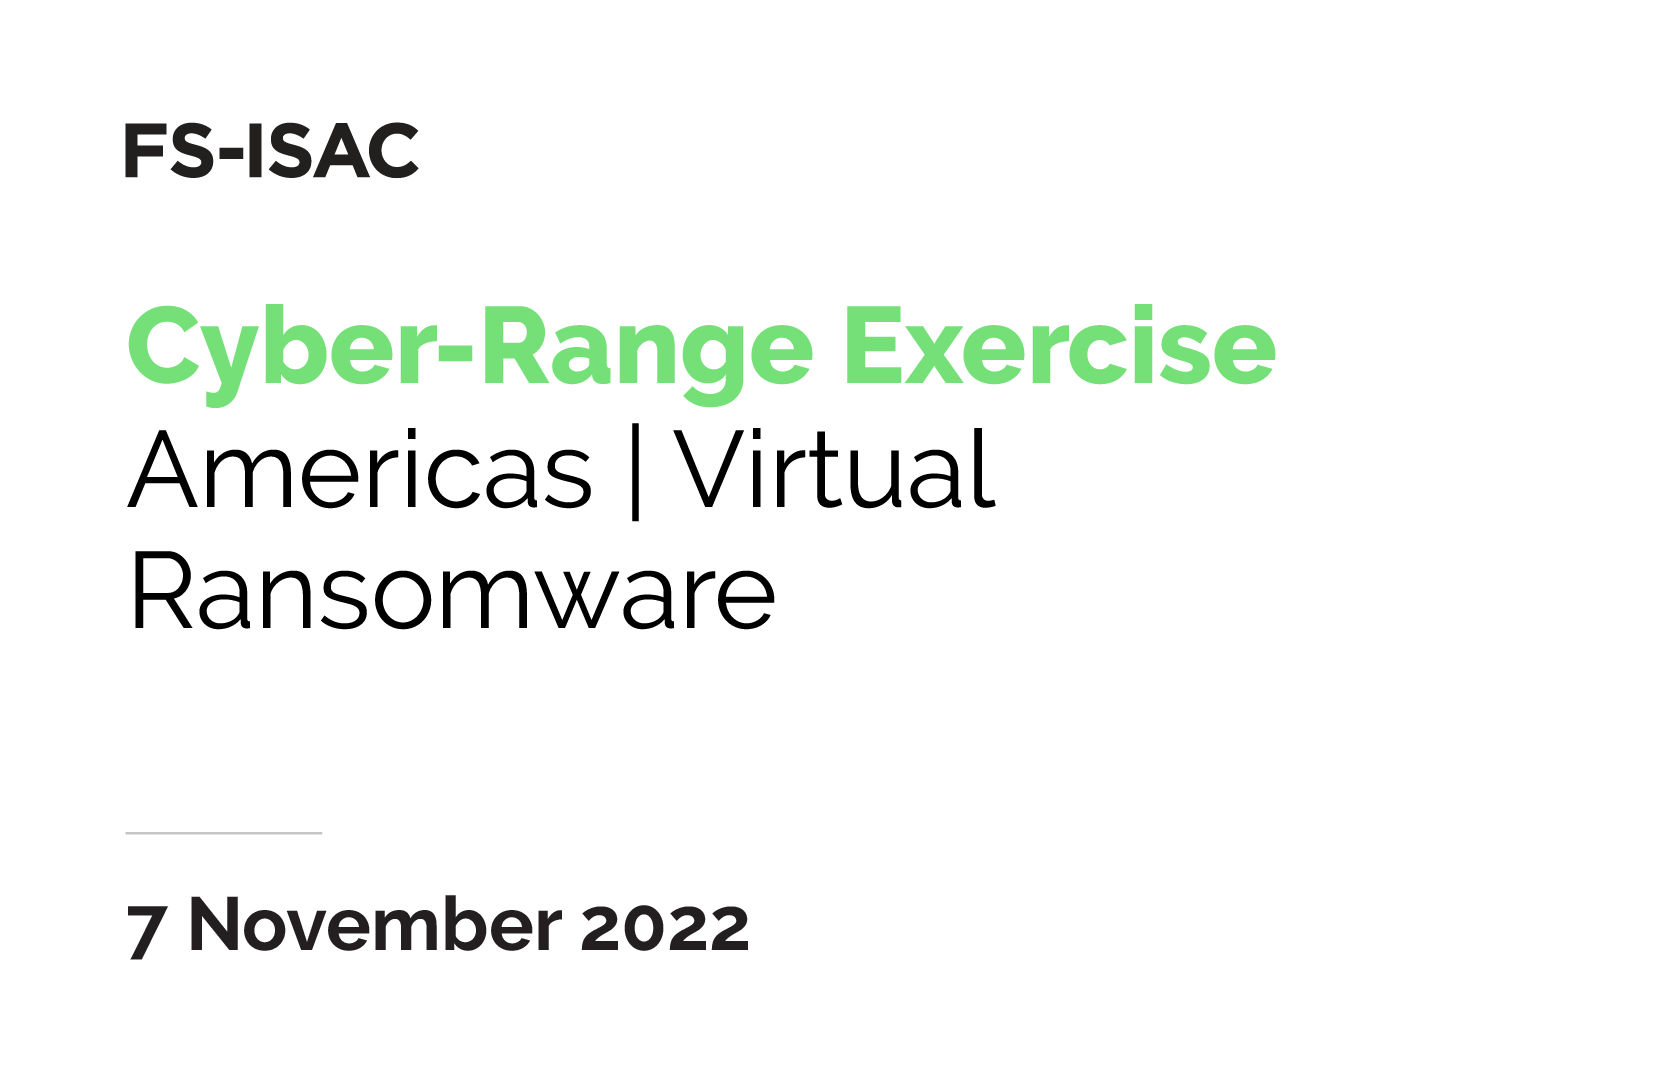 FS-ISAC Cyber Range Exercise | Ransomware Americas | November 2022